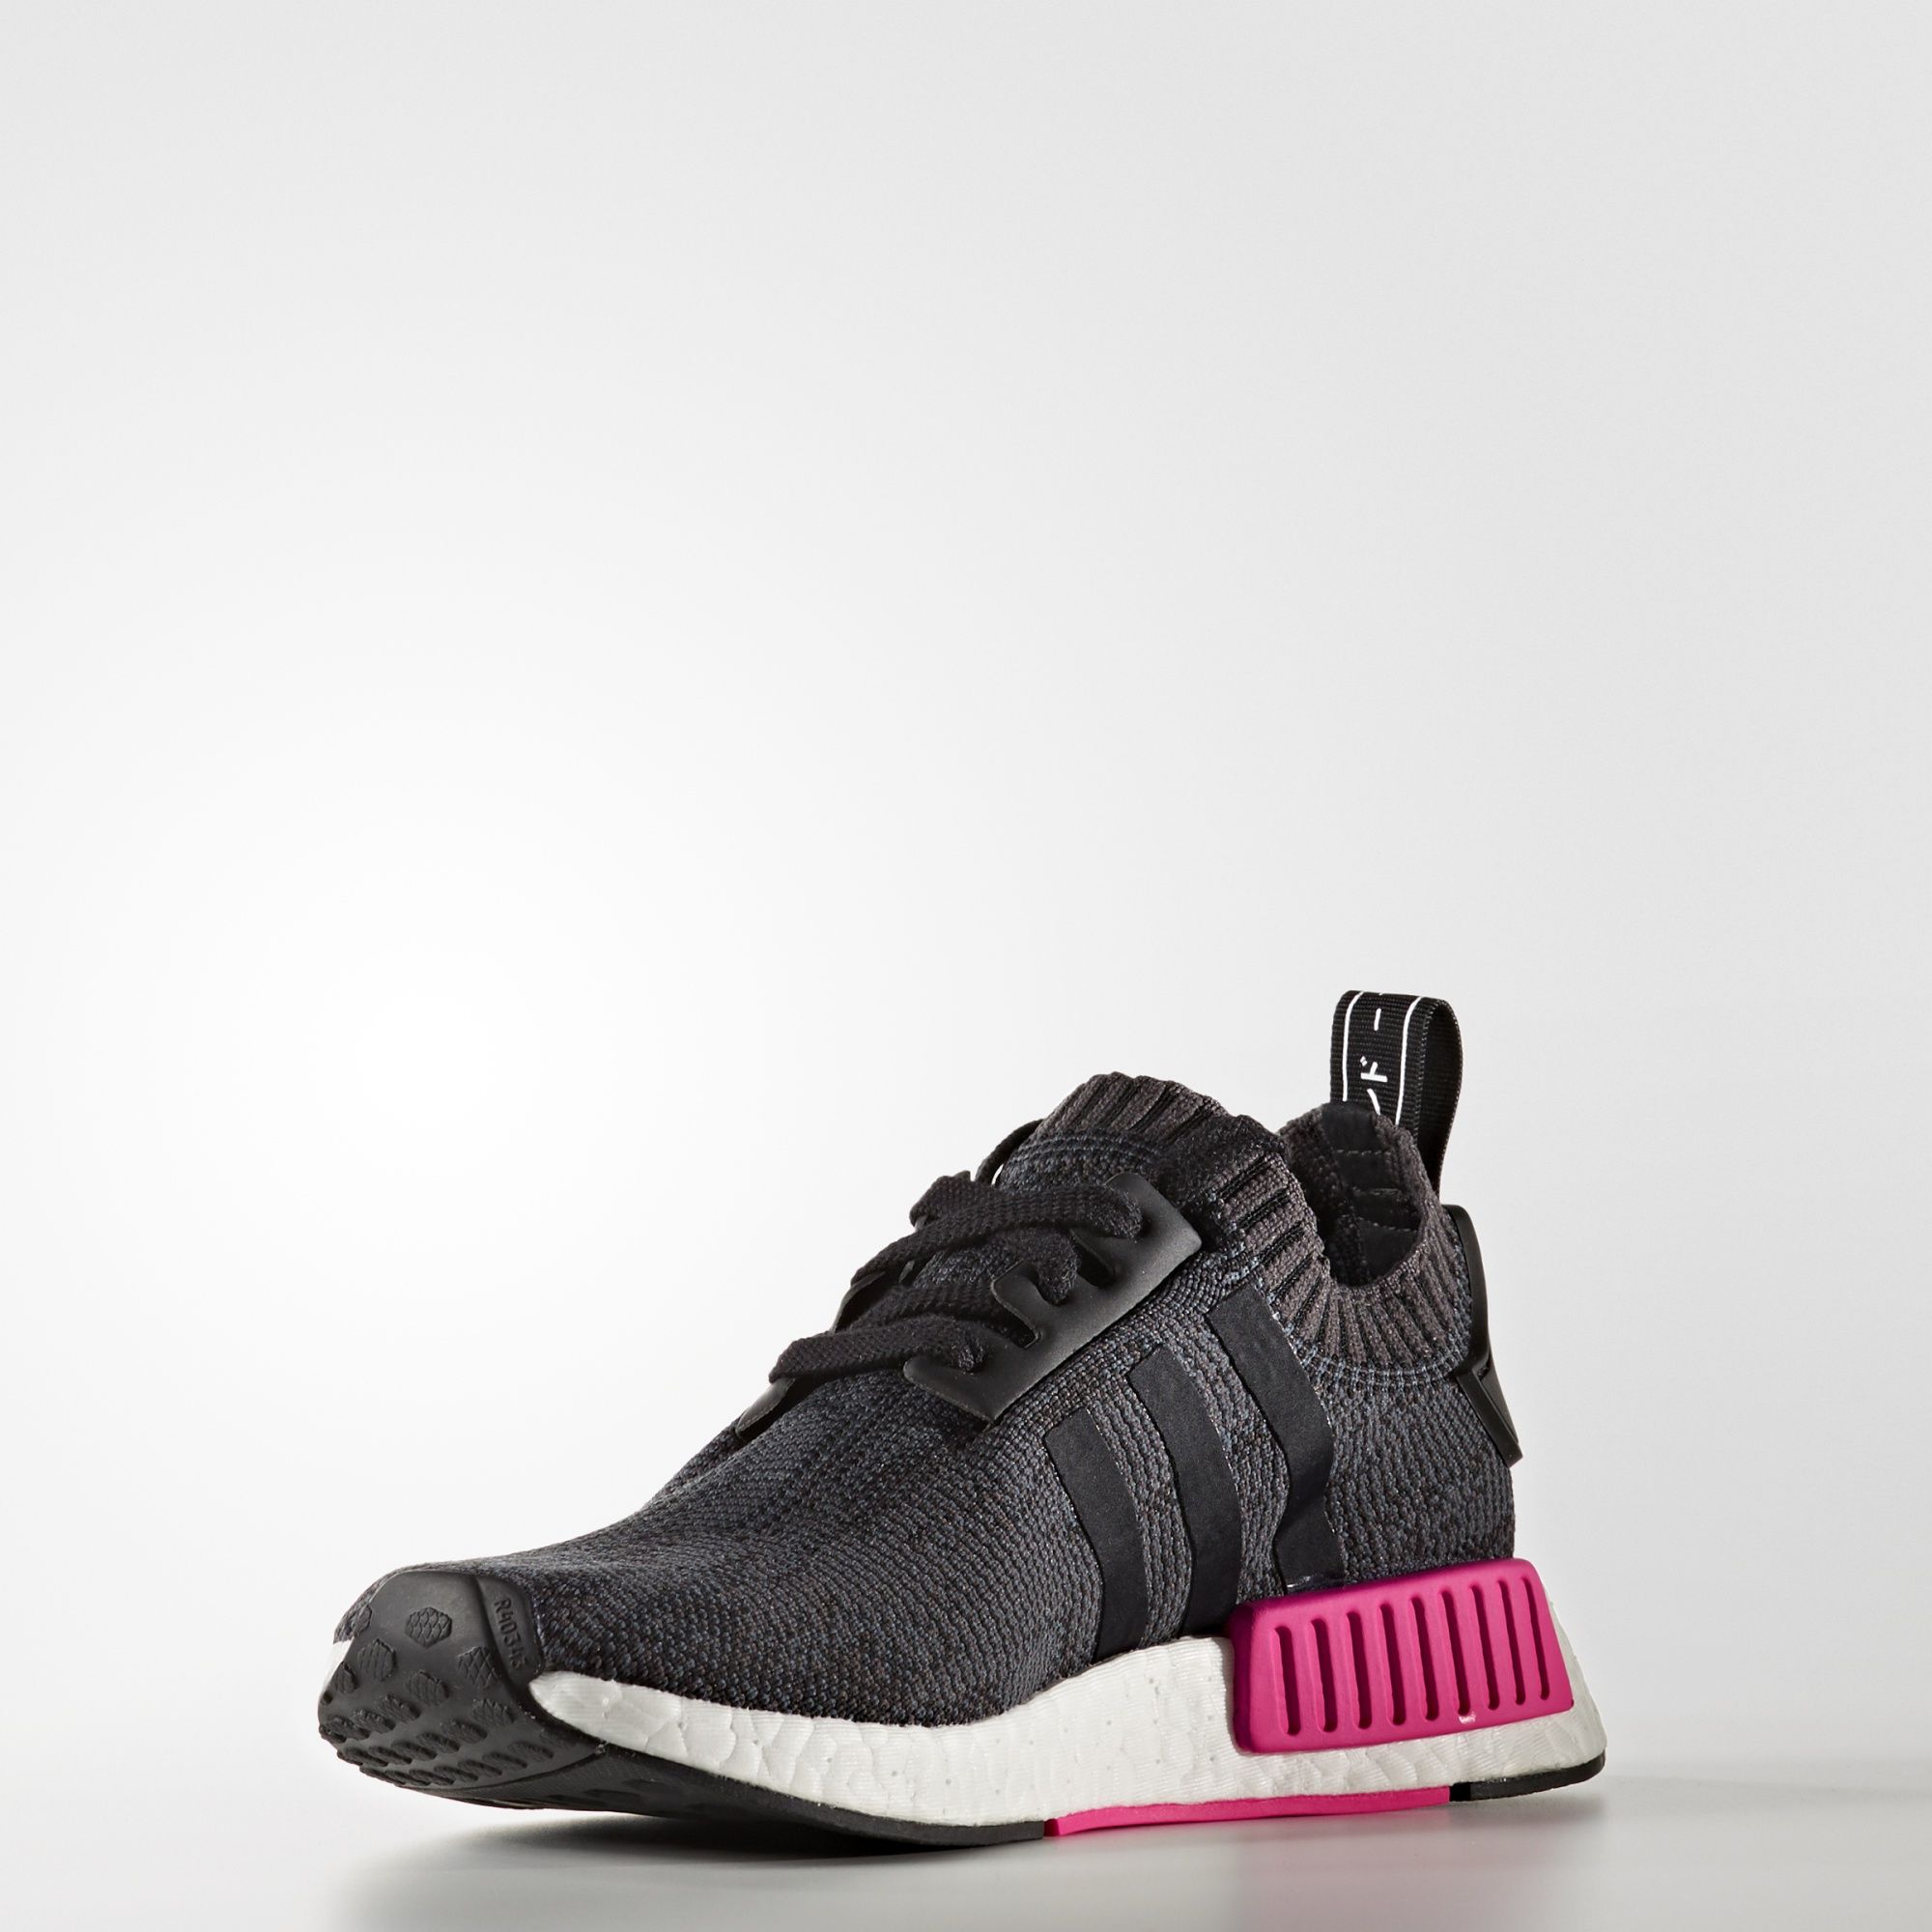 Adidas W NMD_R1
Core Black / Shock Pink